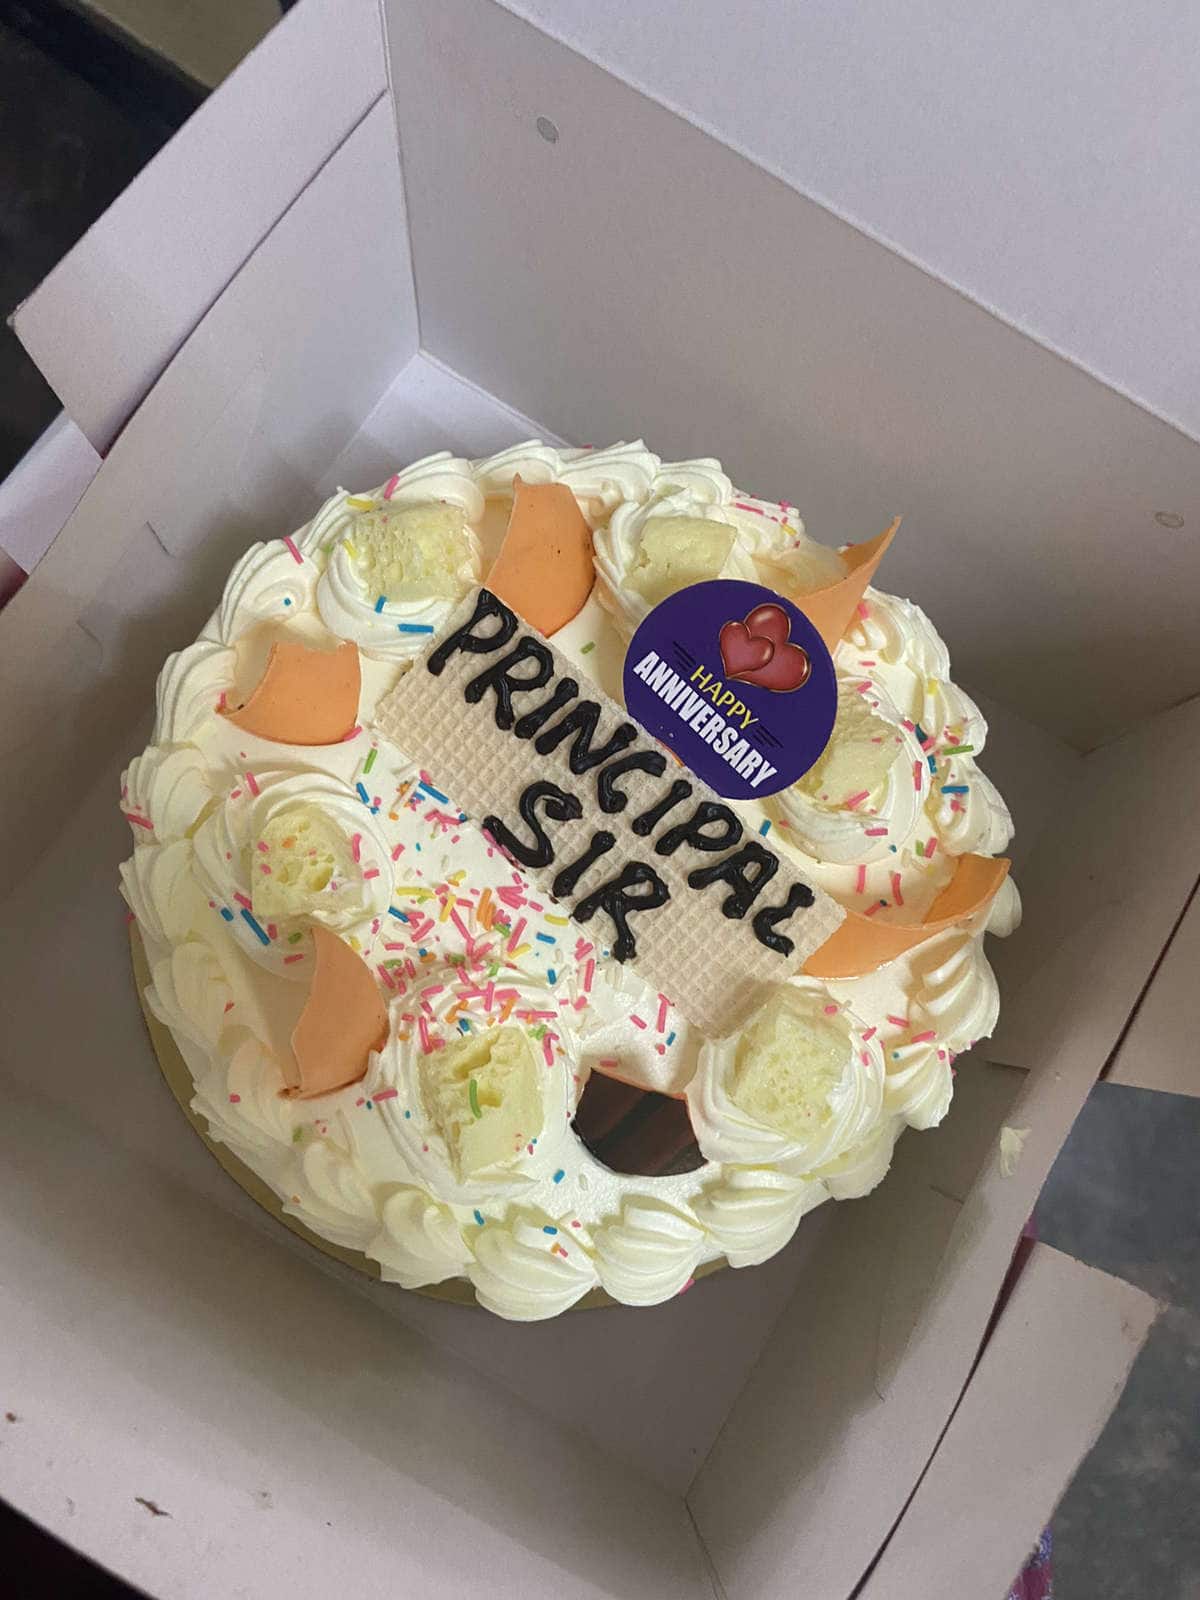 Goodbye cake for my principal : r/cakedecorating